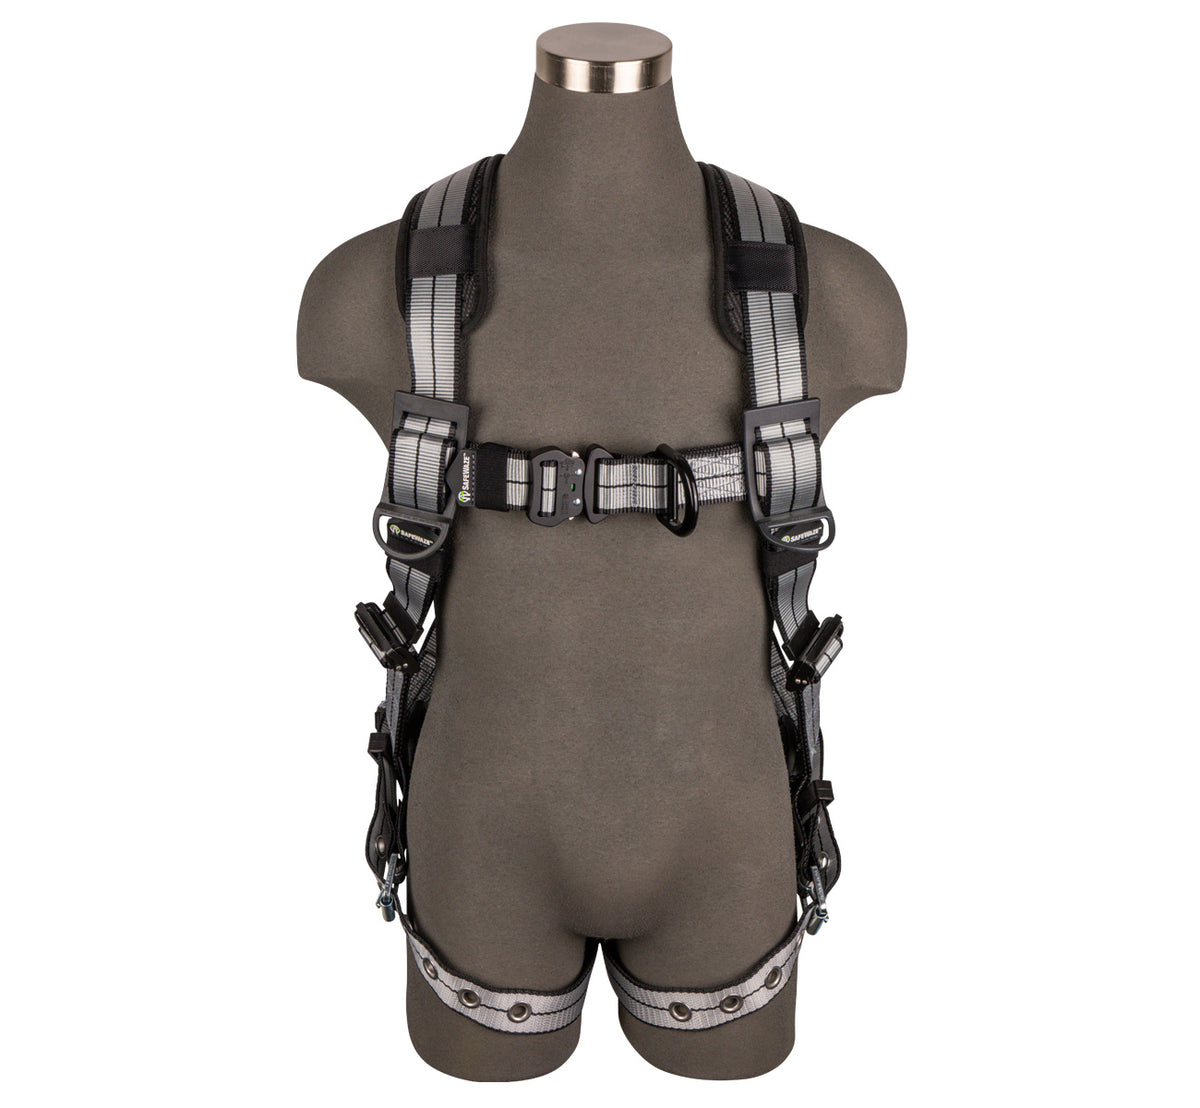 Safewaze V-Line Full Body Harness: Universal, 1D, QC Chest, TB